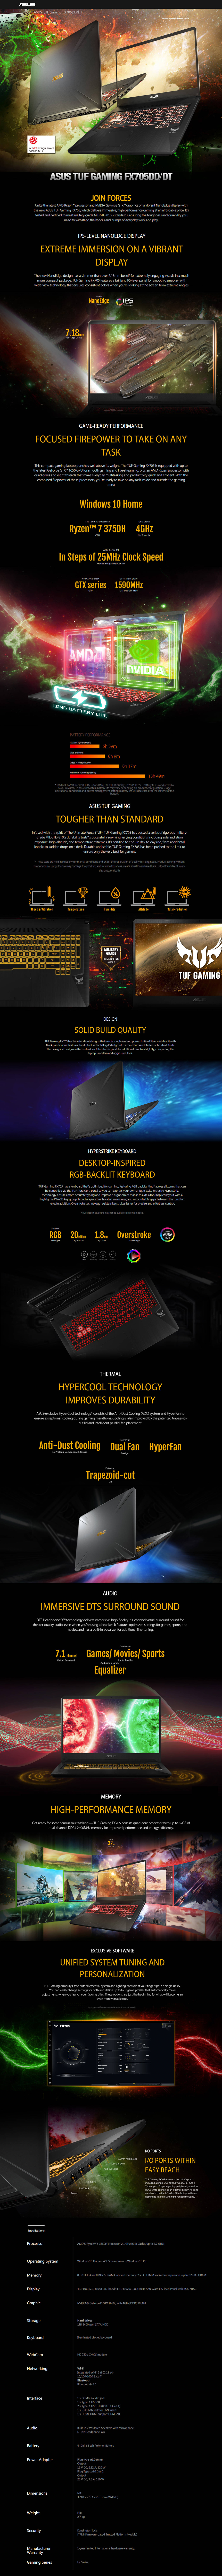 Buy Online Asus TUF Gaming FX705DT-AU094T 17inch Gaming Laptop - Black (AMD R5-3550H, 8GB, 1TB, GTX 1650 4GB, Windows 10)